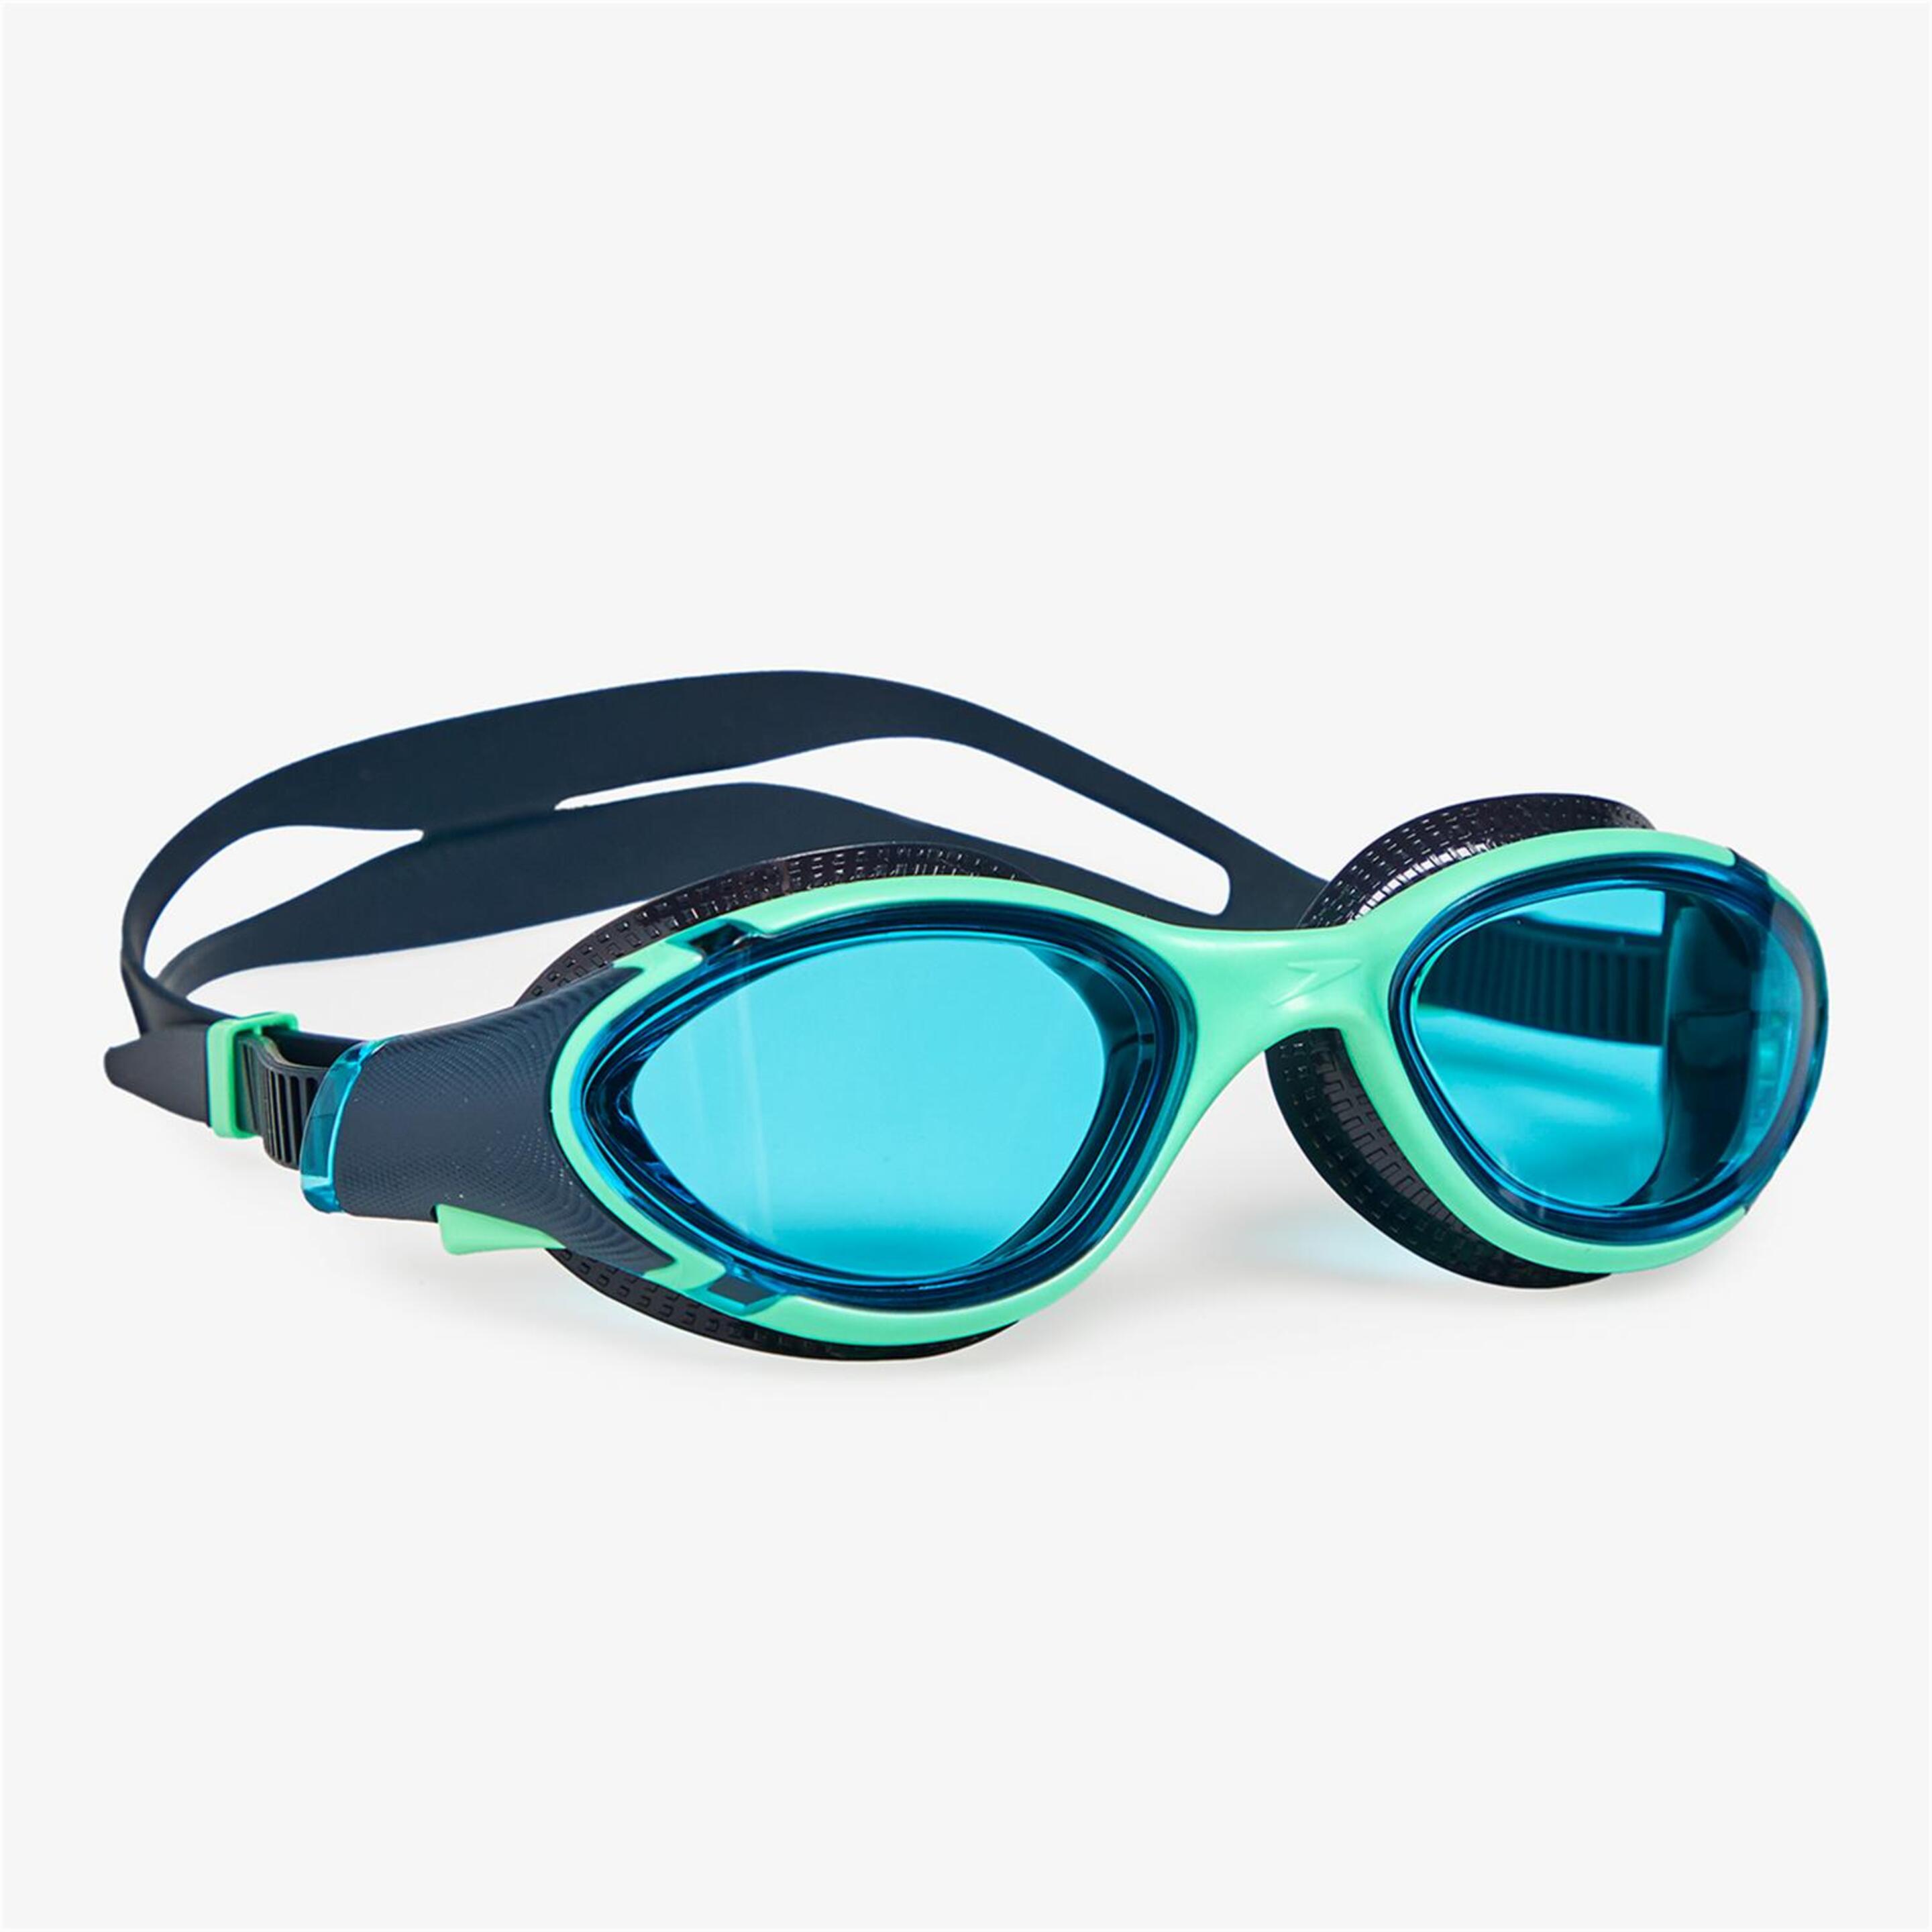 Speedo Biofuse 2.0 - Azul - Óculos Piscina | Spprt Zone